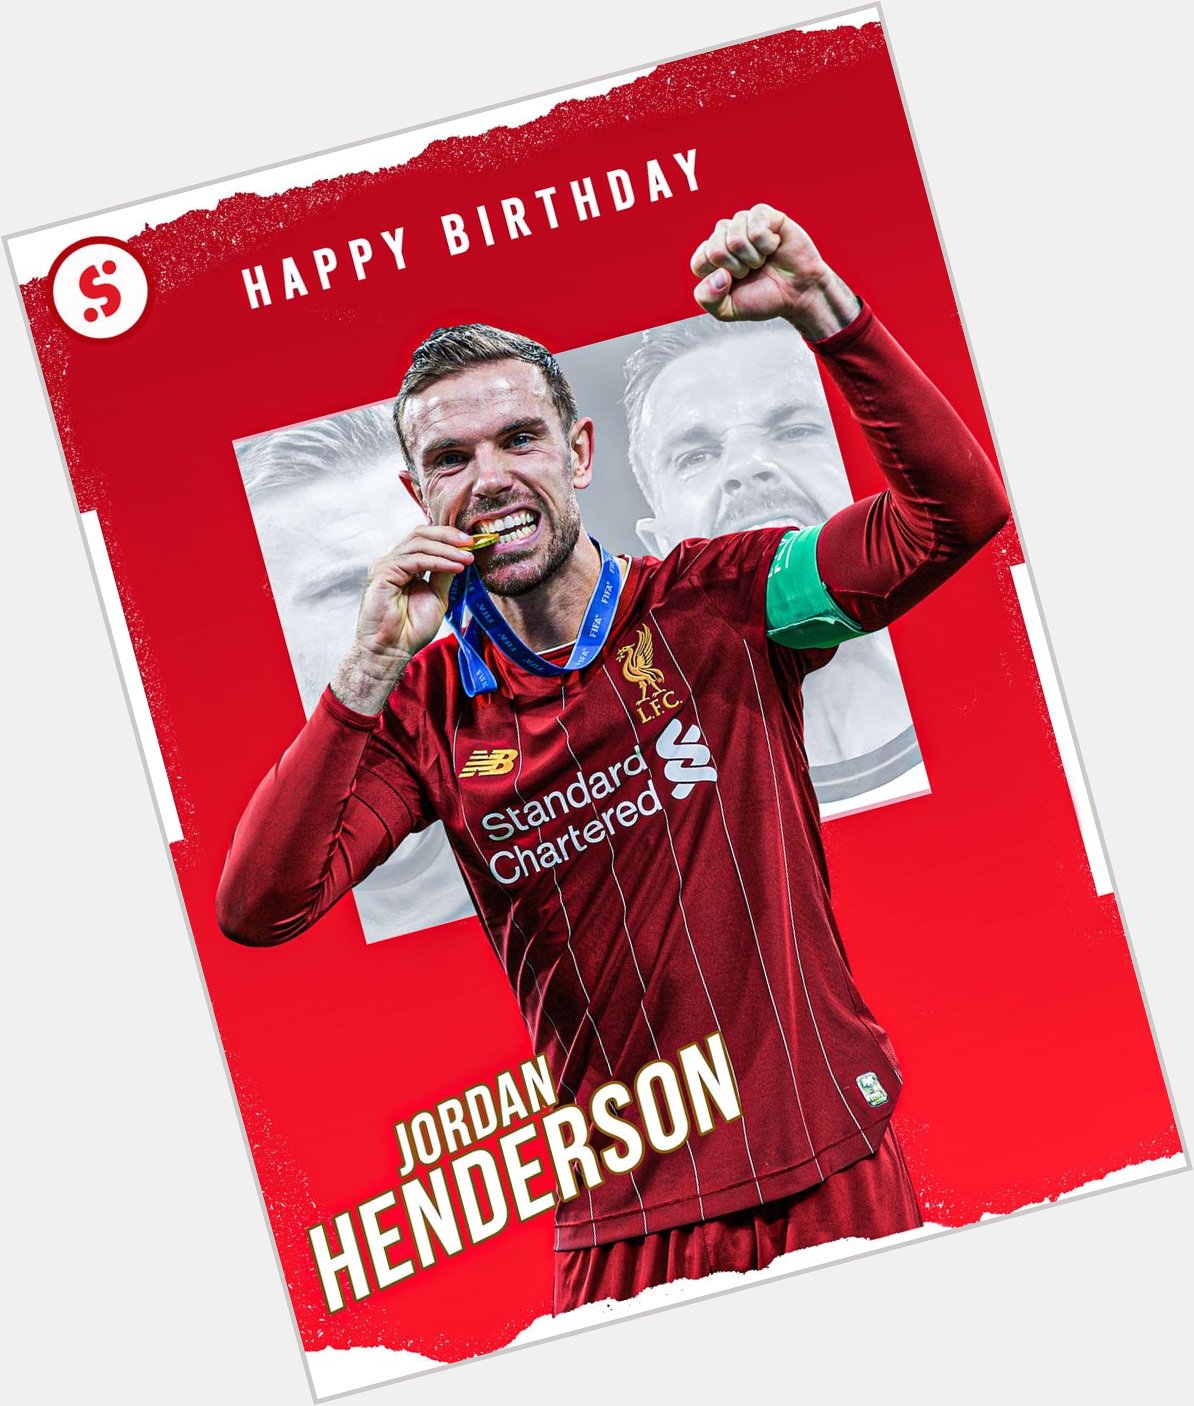 Happy birthday to Jordan Henderson who turns 32 today!     